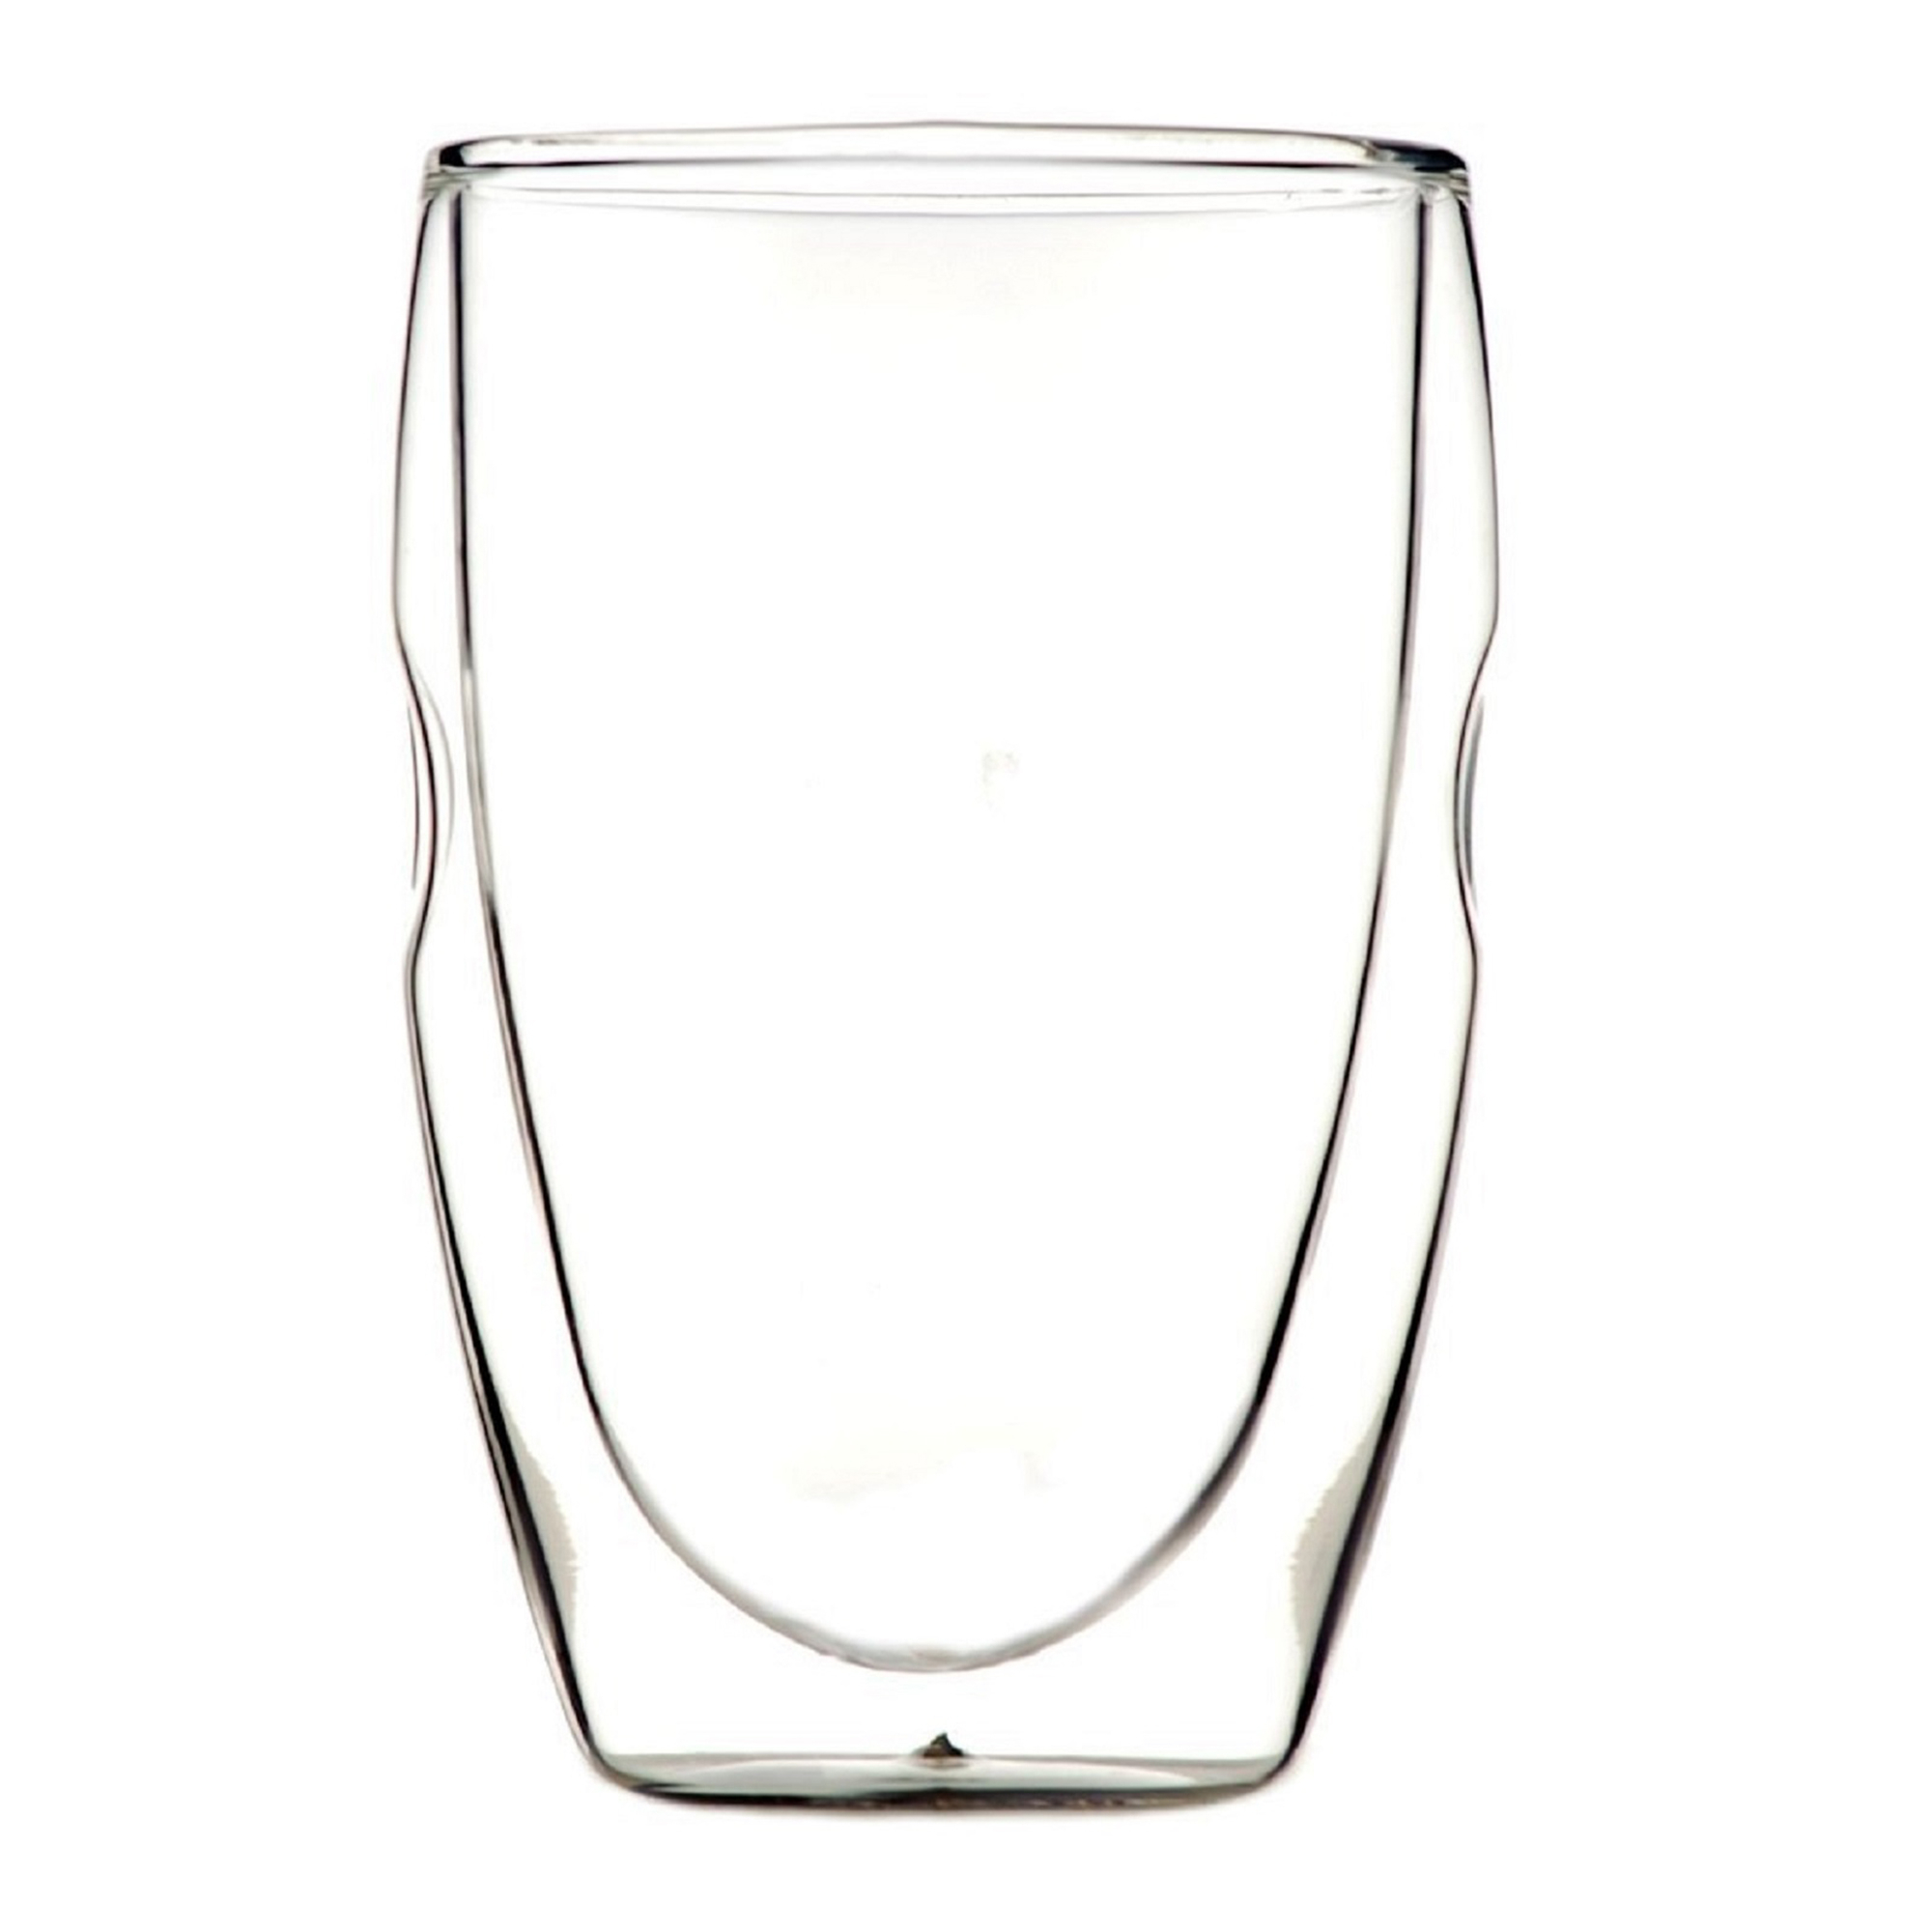 Ozeri Moderna Artisan Series Double Wall 12 oz Beverage Glasses - Set of 8 Drinking Glasses